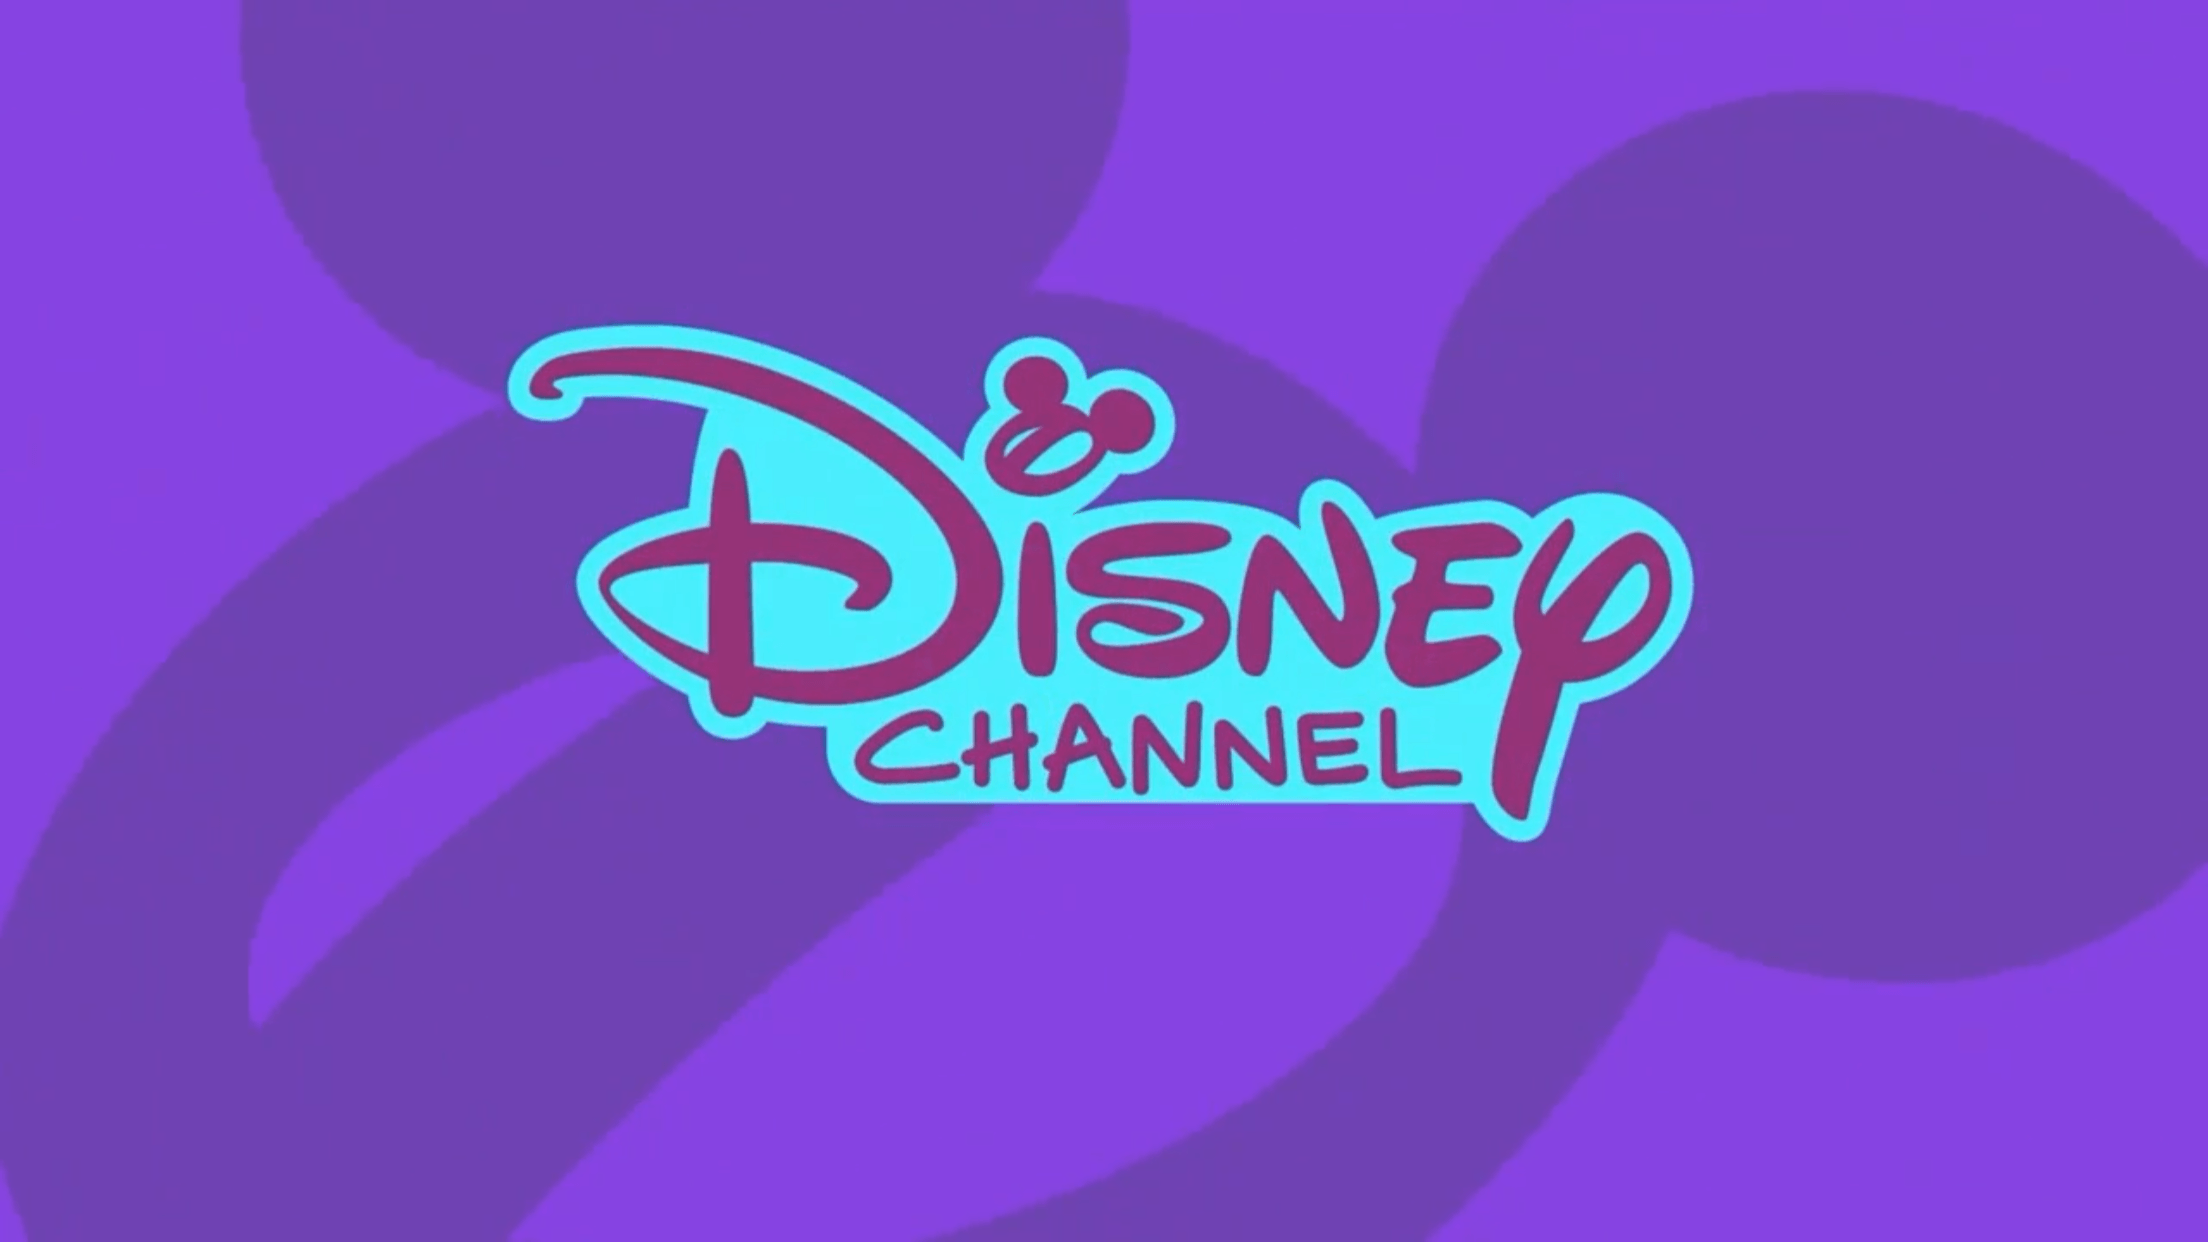 Disney Channel 2017 Logo - Image - Disney Channel 2017 Purple Background.png | Logopedia ...